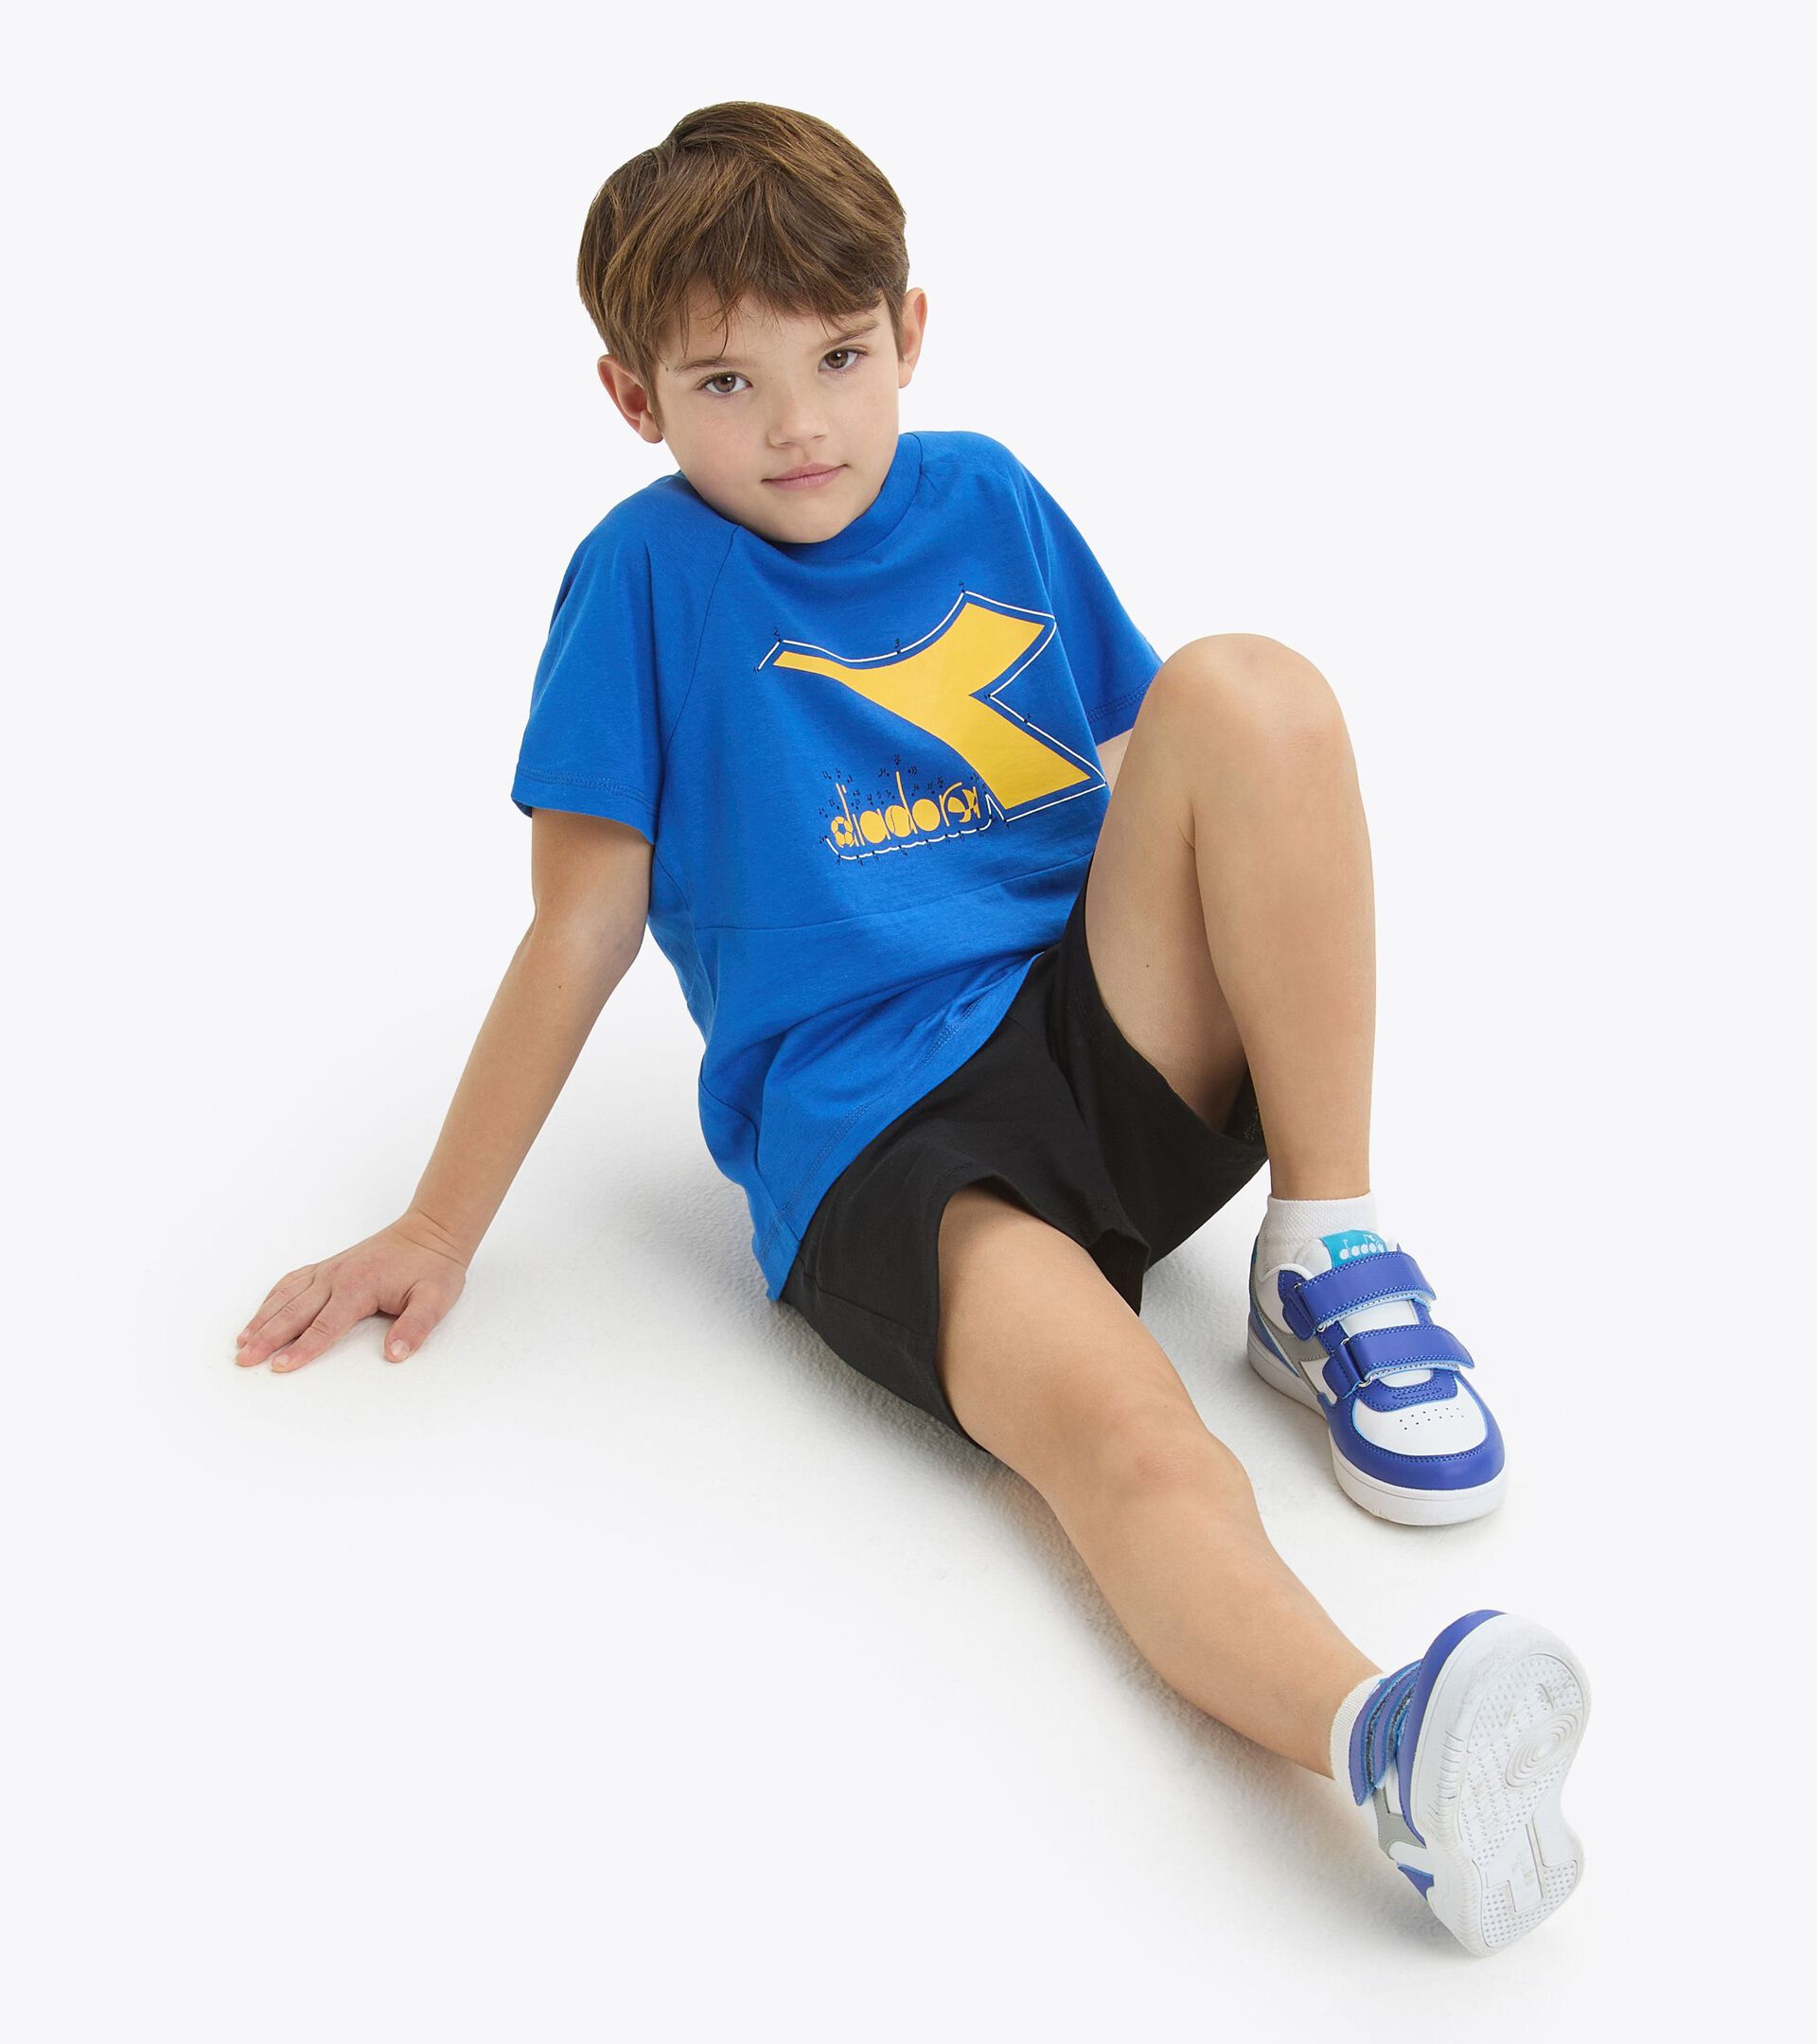 Sports set - T-shirt and shorts - Boy
 JB. SET SS RIDDLE PRINCESS BLUE - Diadora